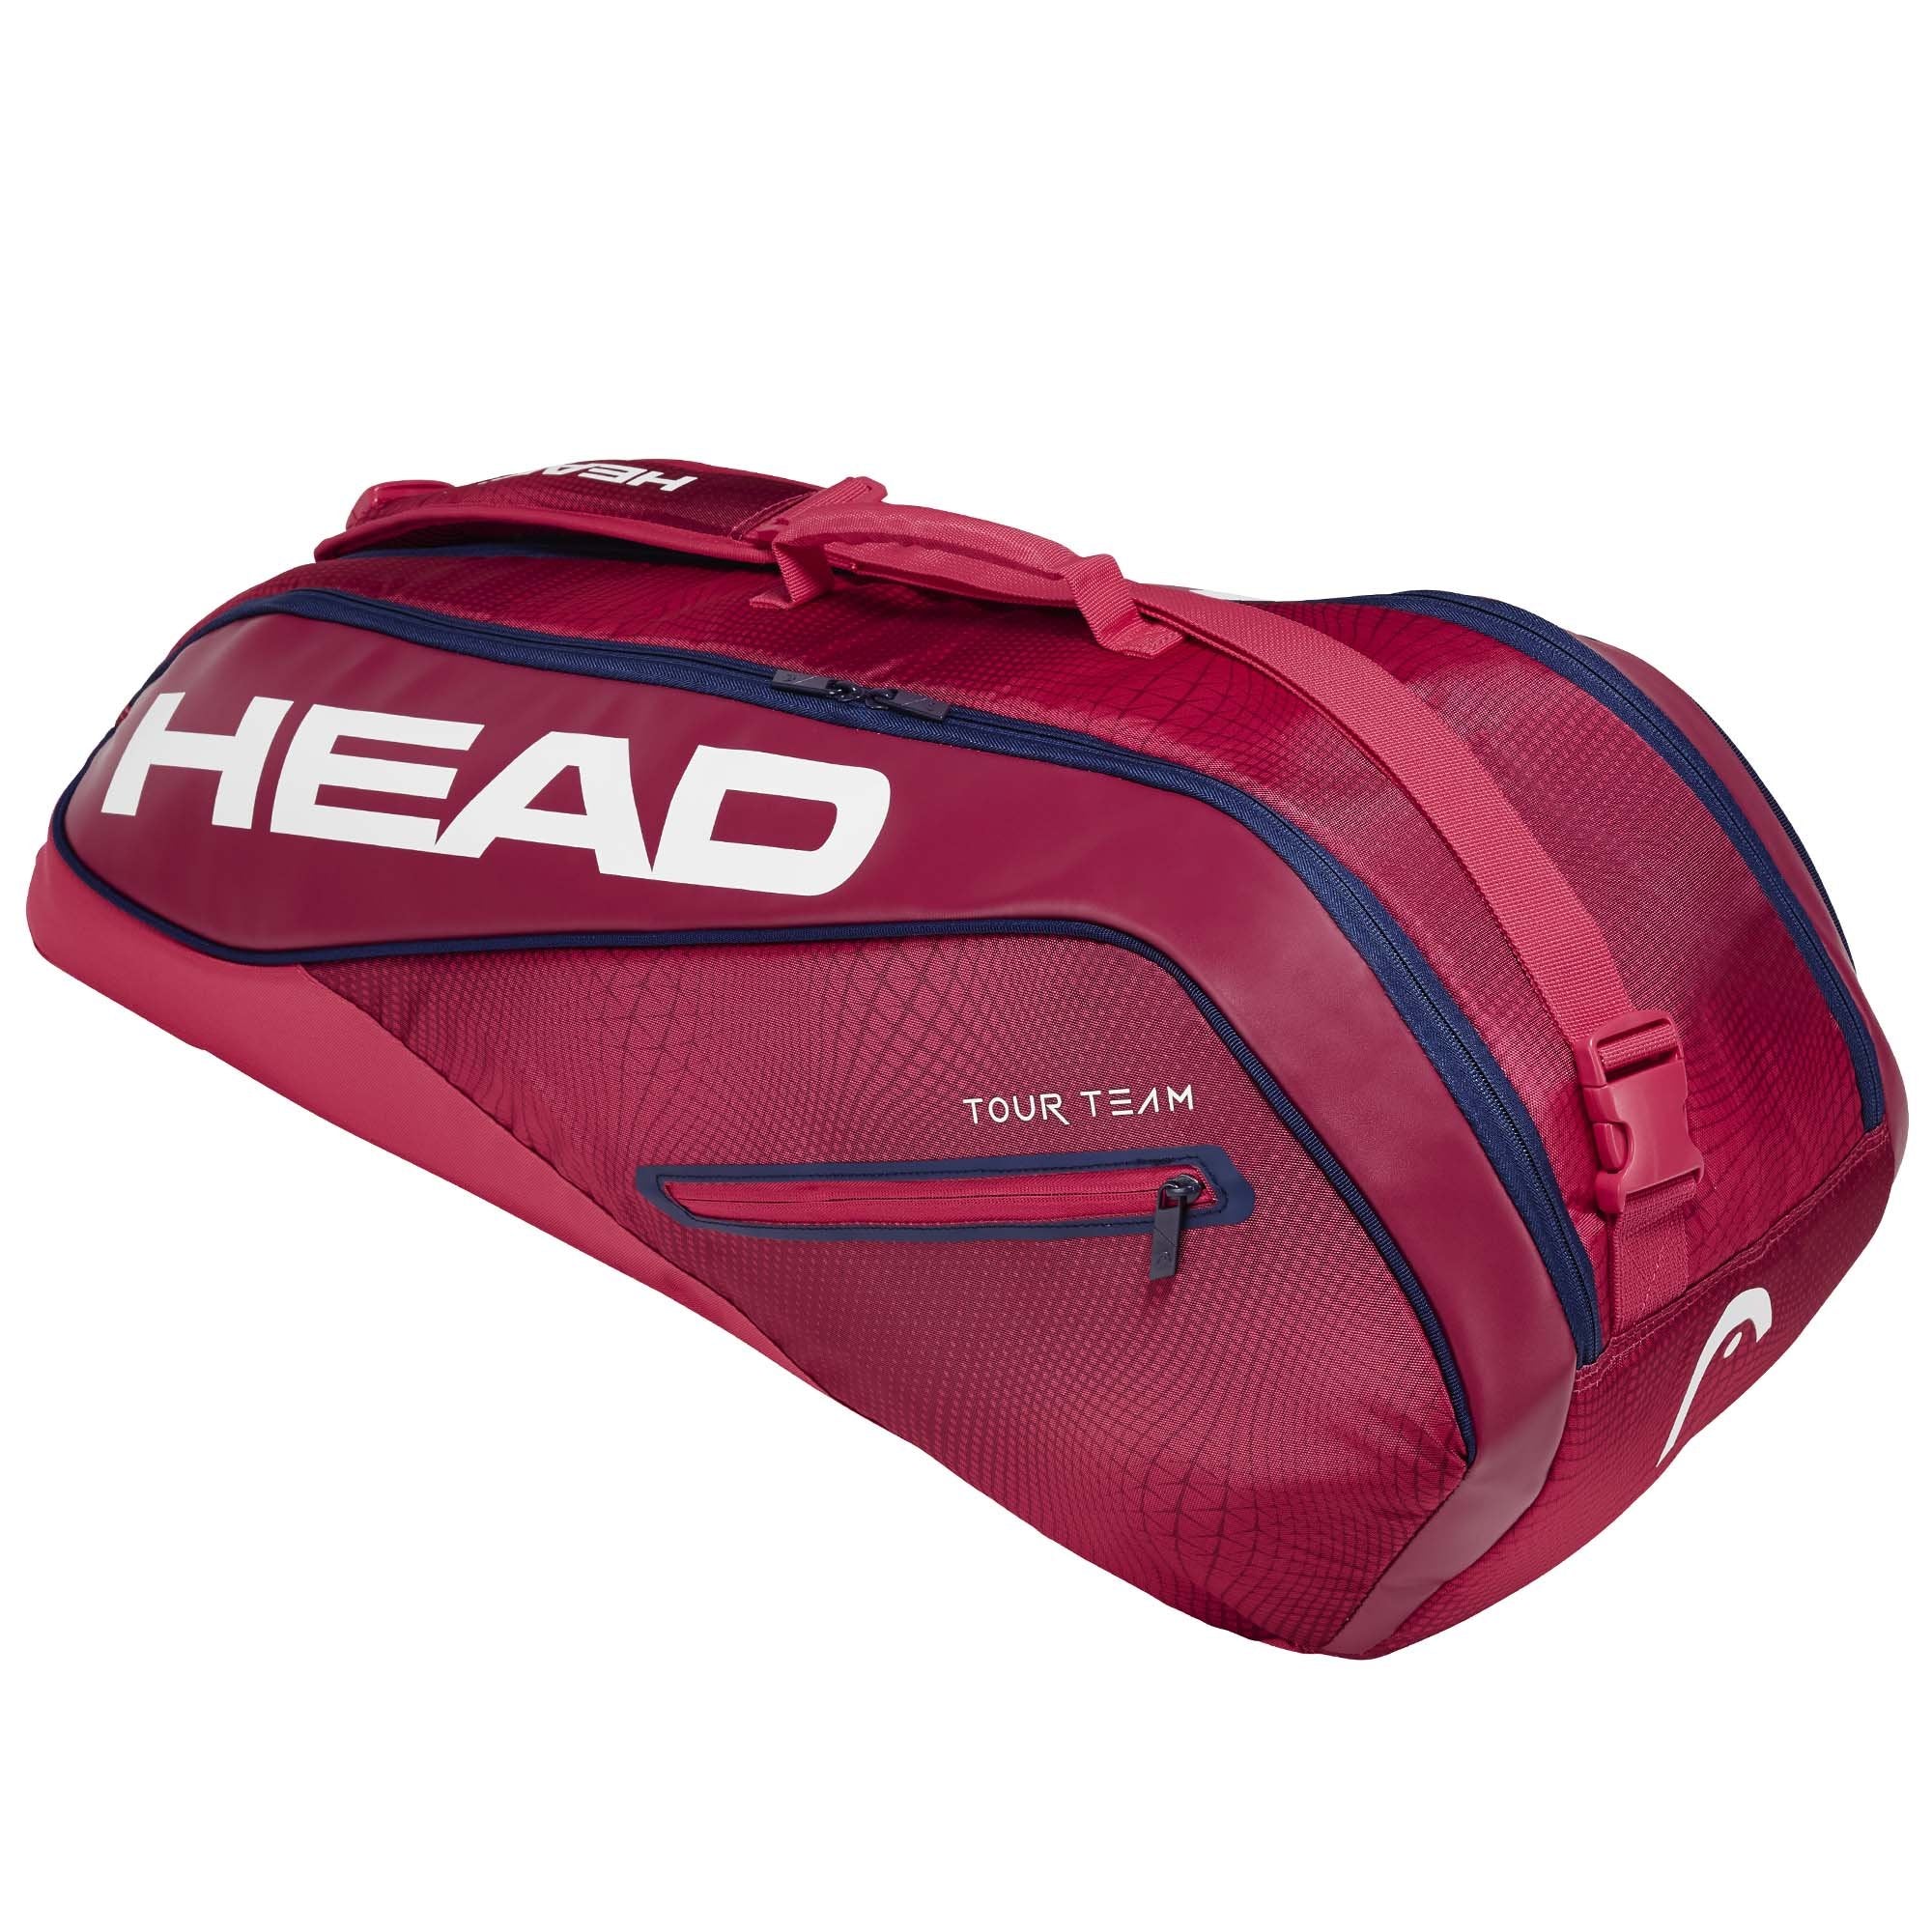 Head Tour Team Combi 6 Racket Bag - Red